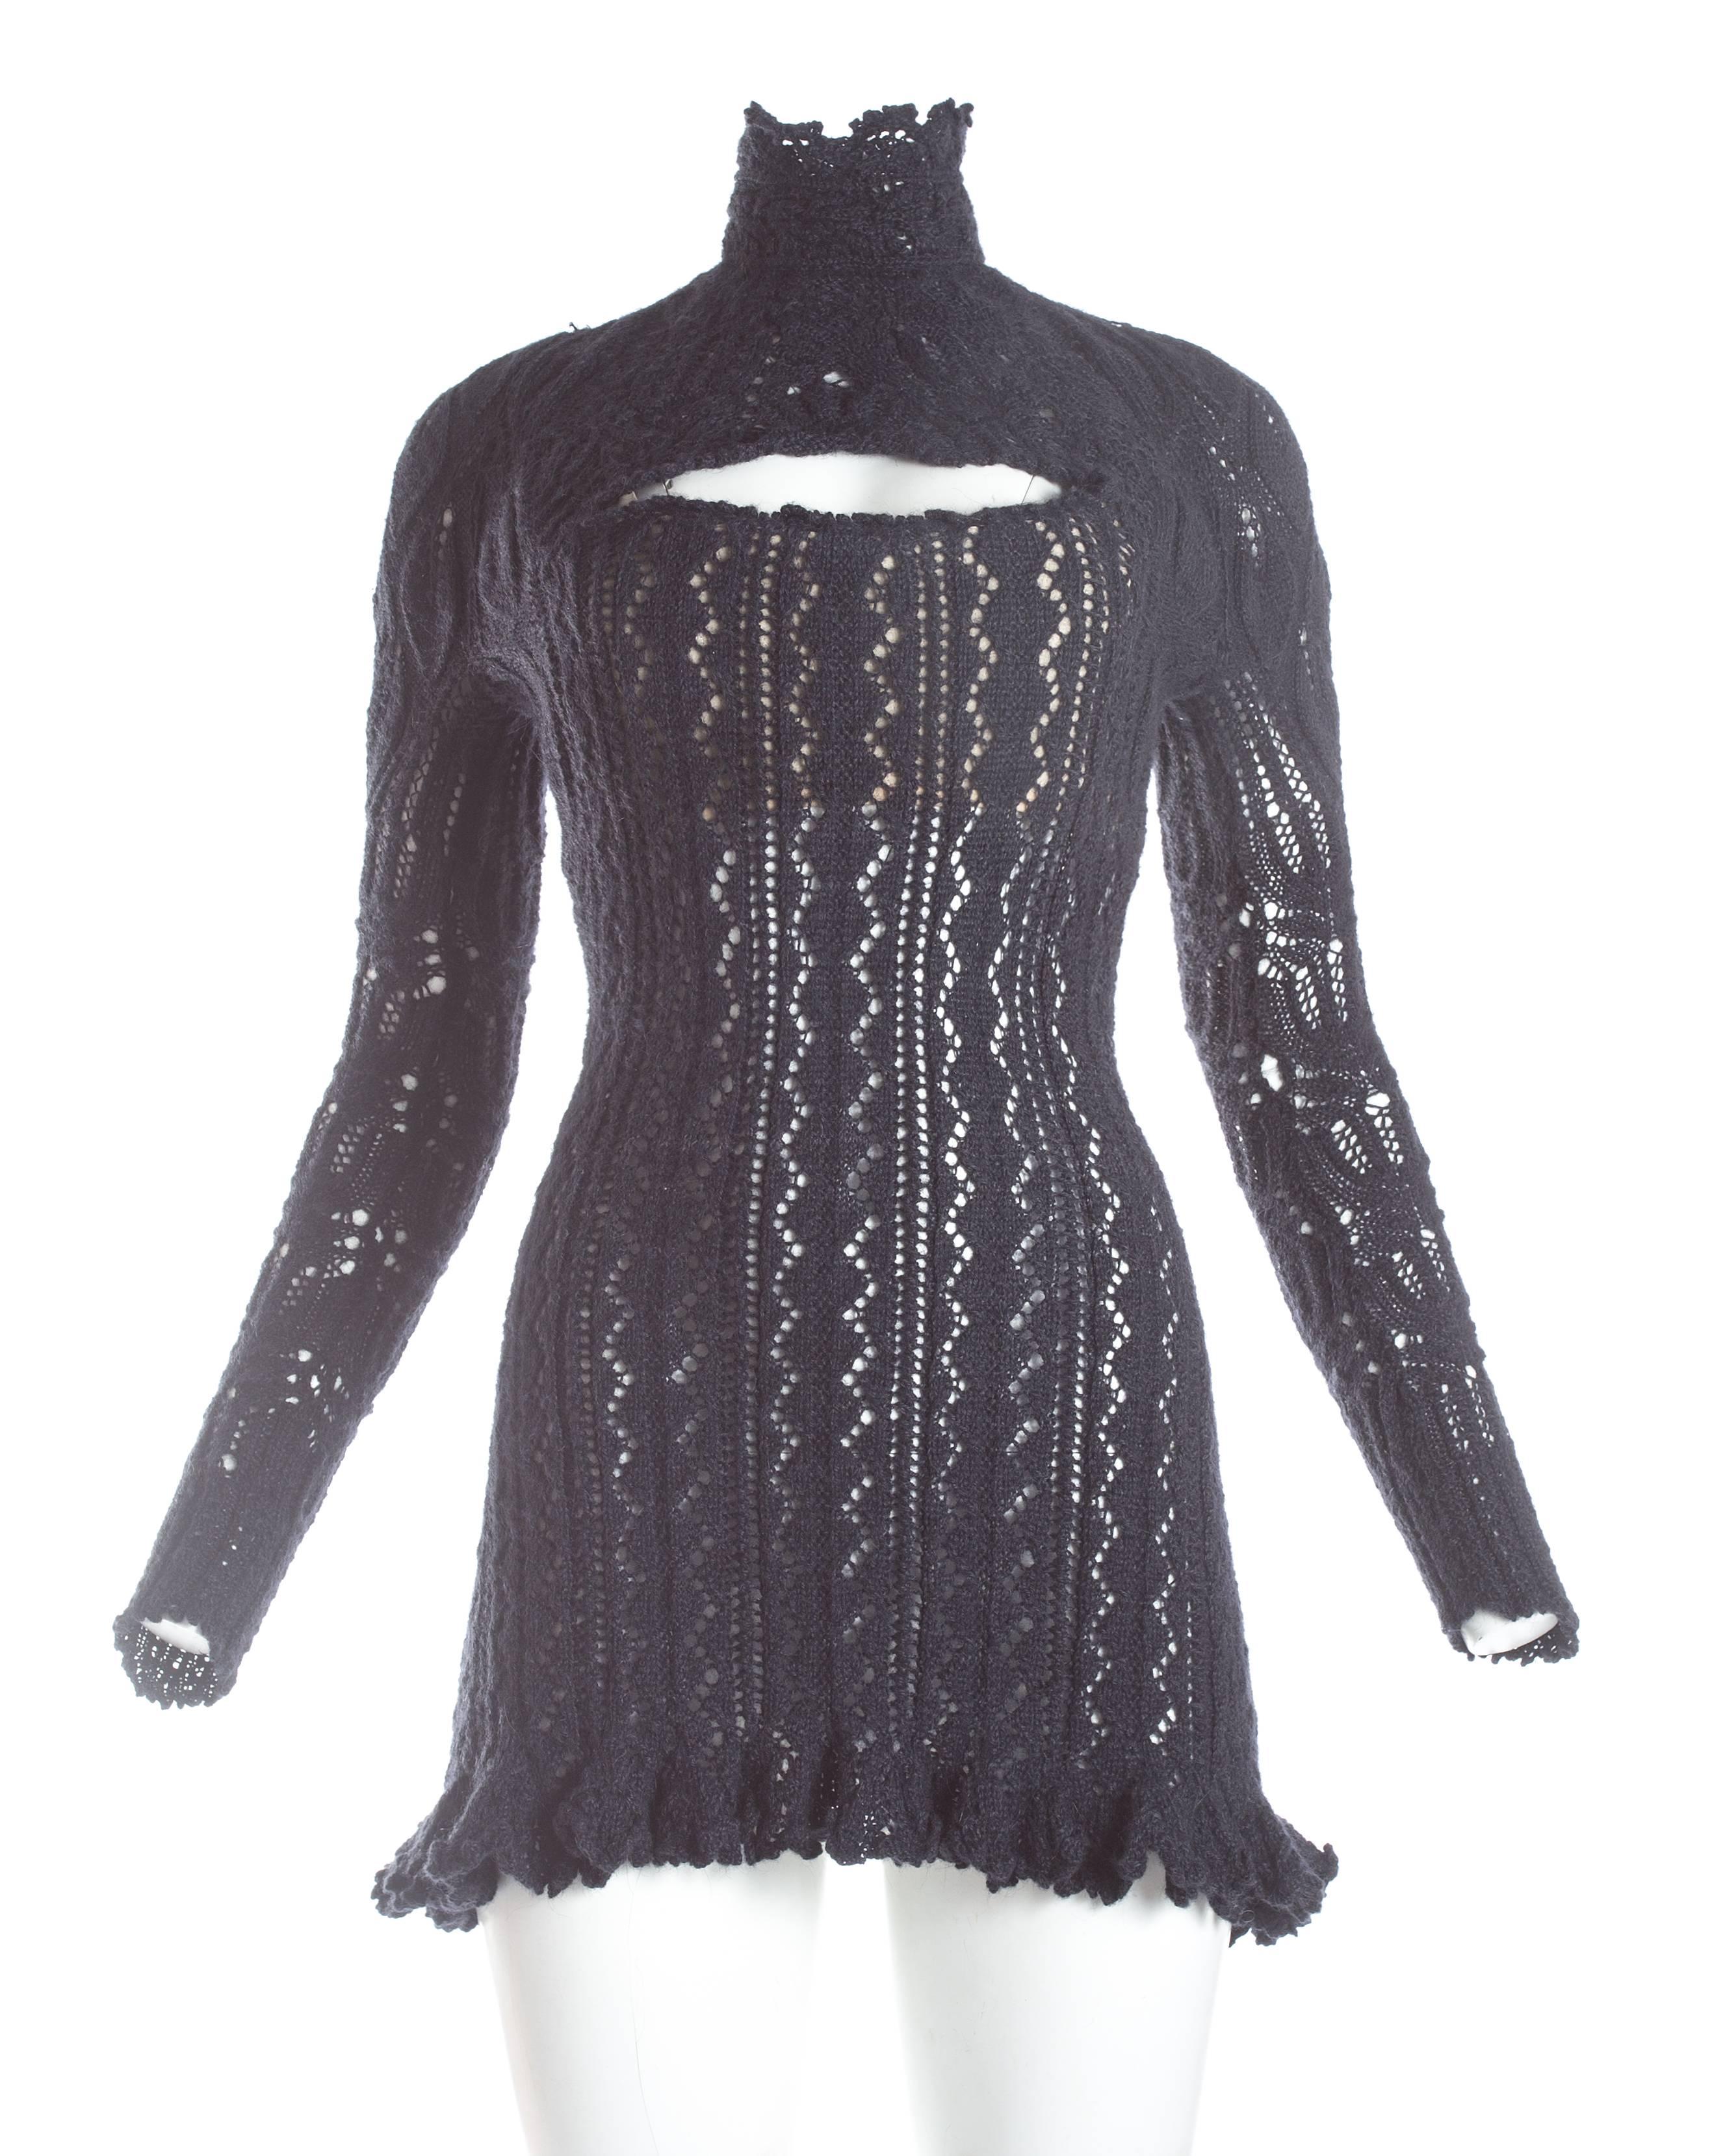 - Internal boned corset 
- Cleavage cut-out
- Zip fastening

Autumn-Winter 1993